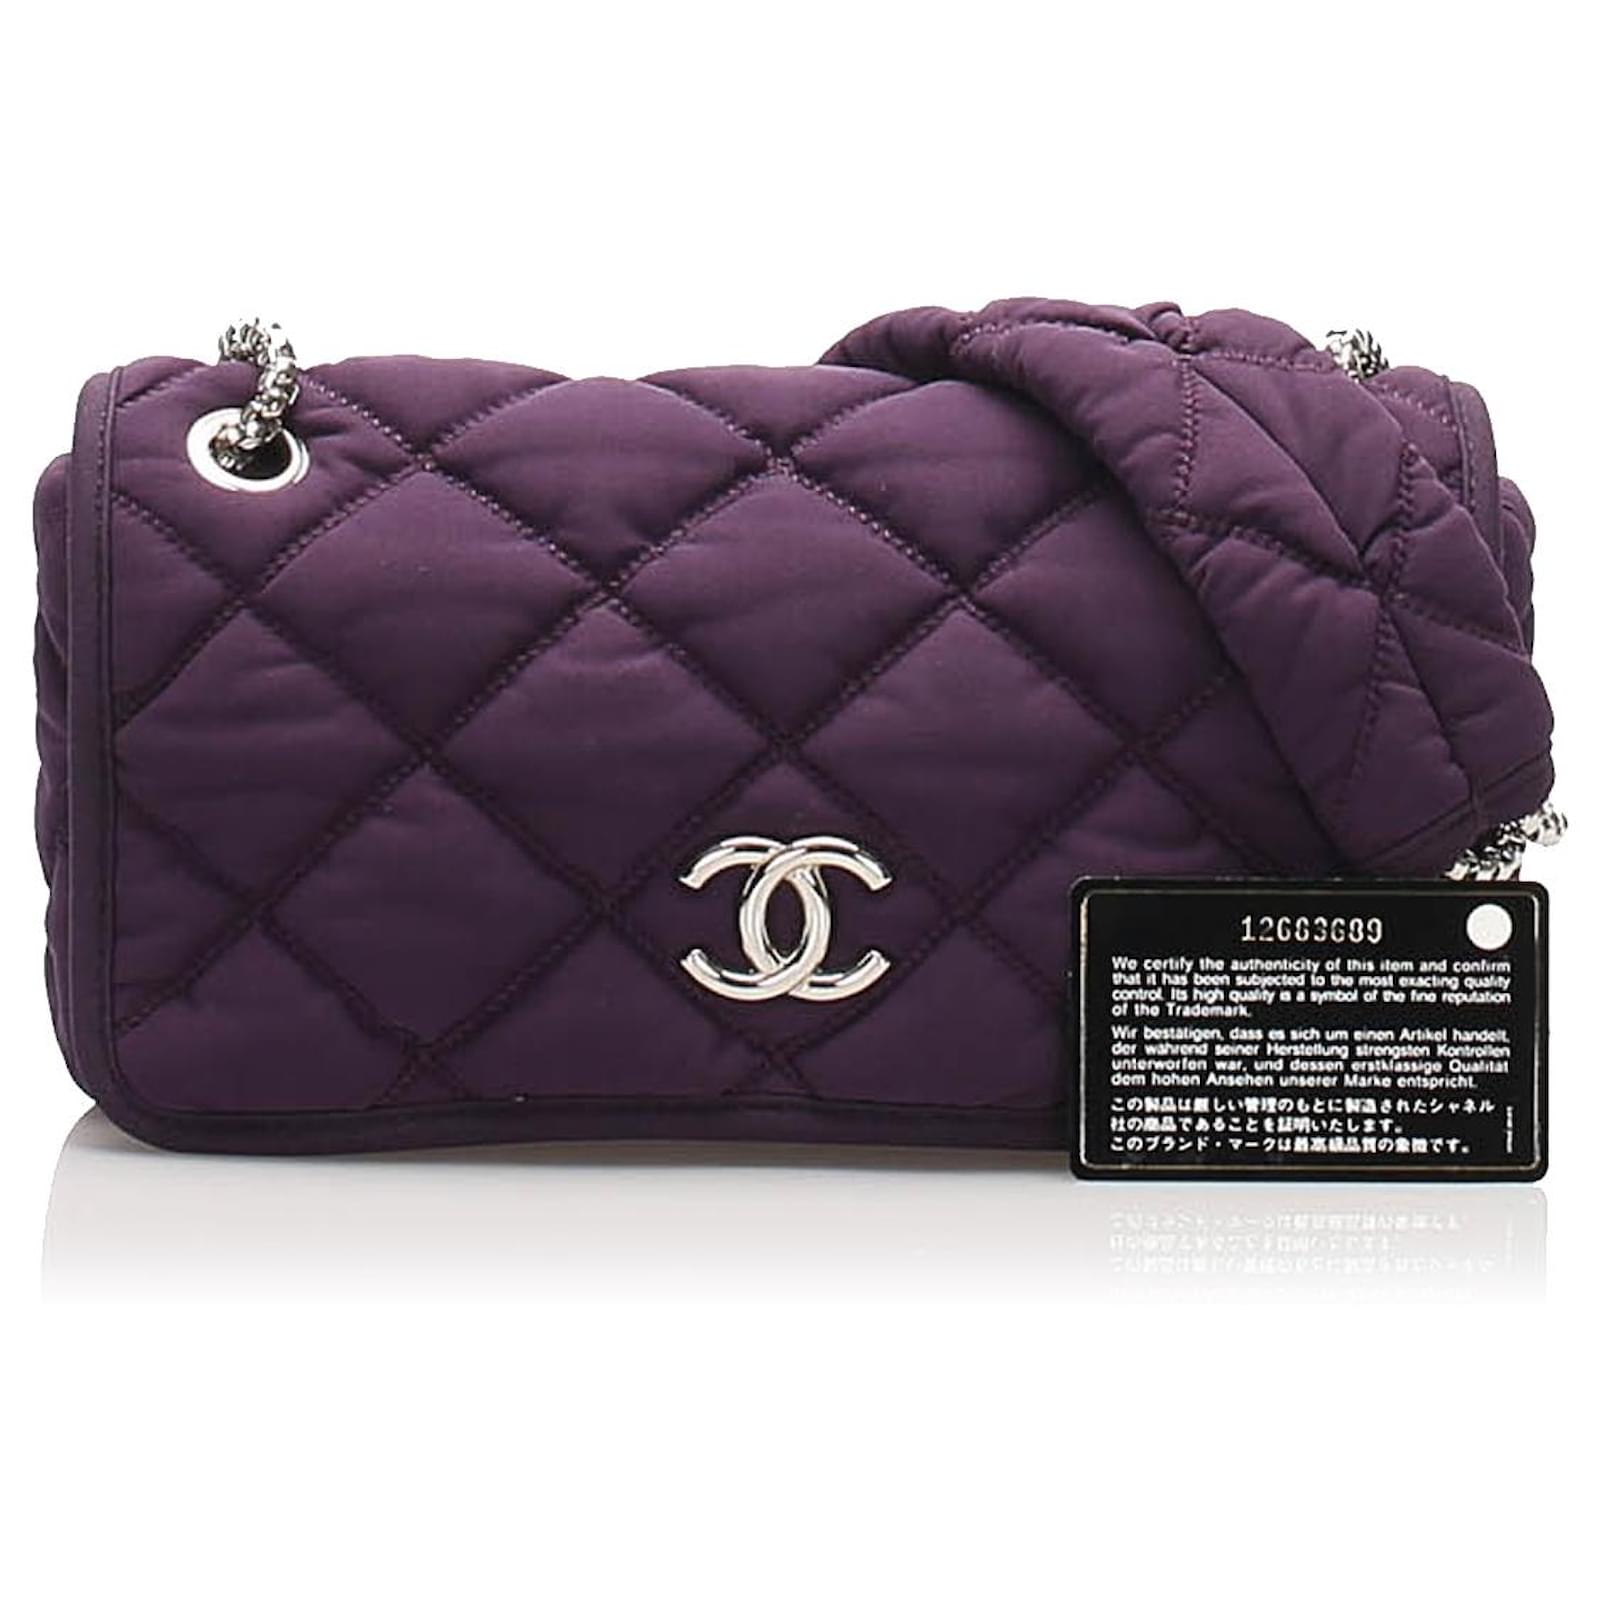 Snag the Latest CHANEL Crossbody Purple Bags & Handbags for Women